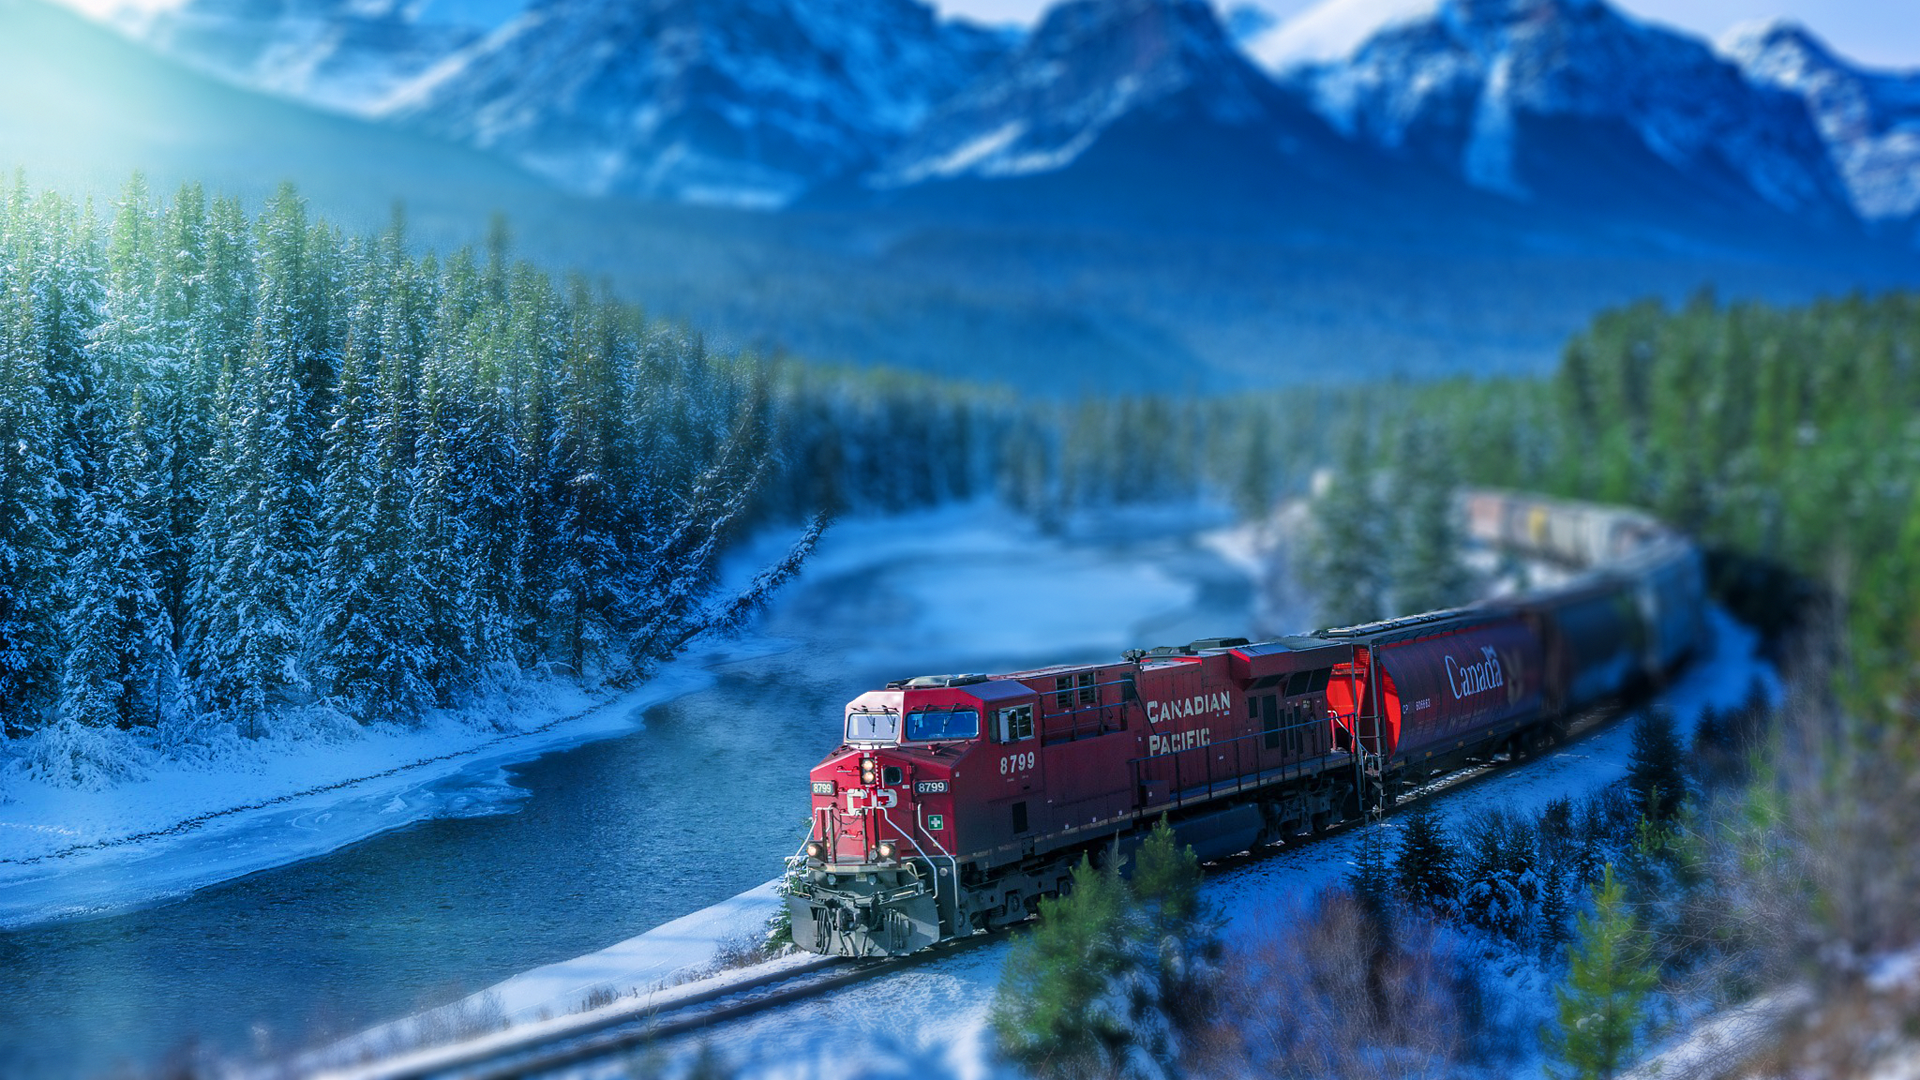 General 1920x1080 train railway winter landscape mountains river snow tilt shift Canada Canadian Pacific Railway